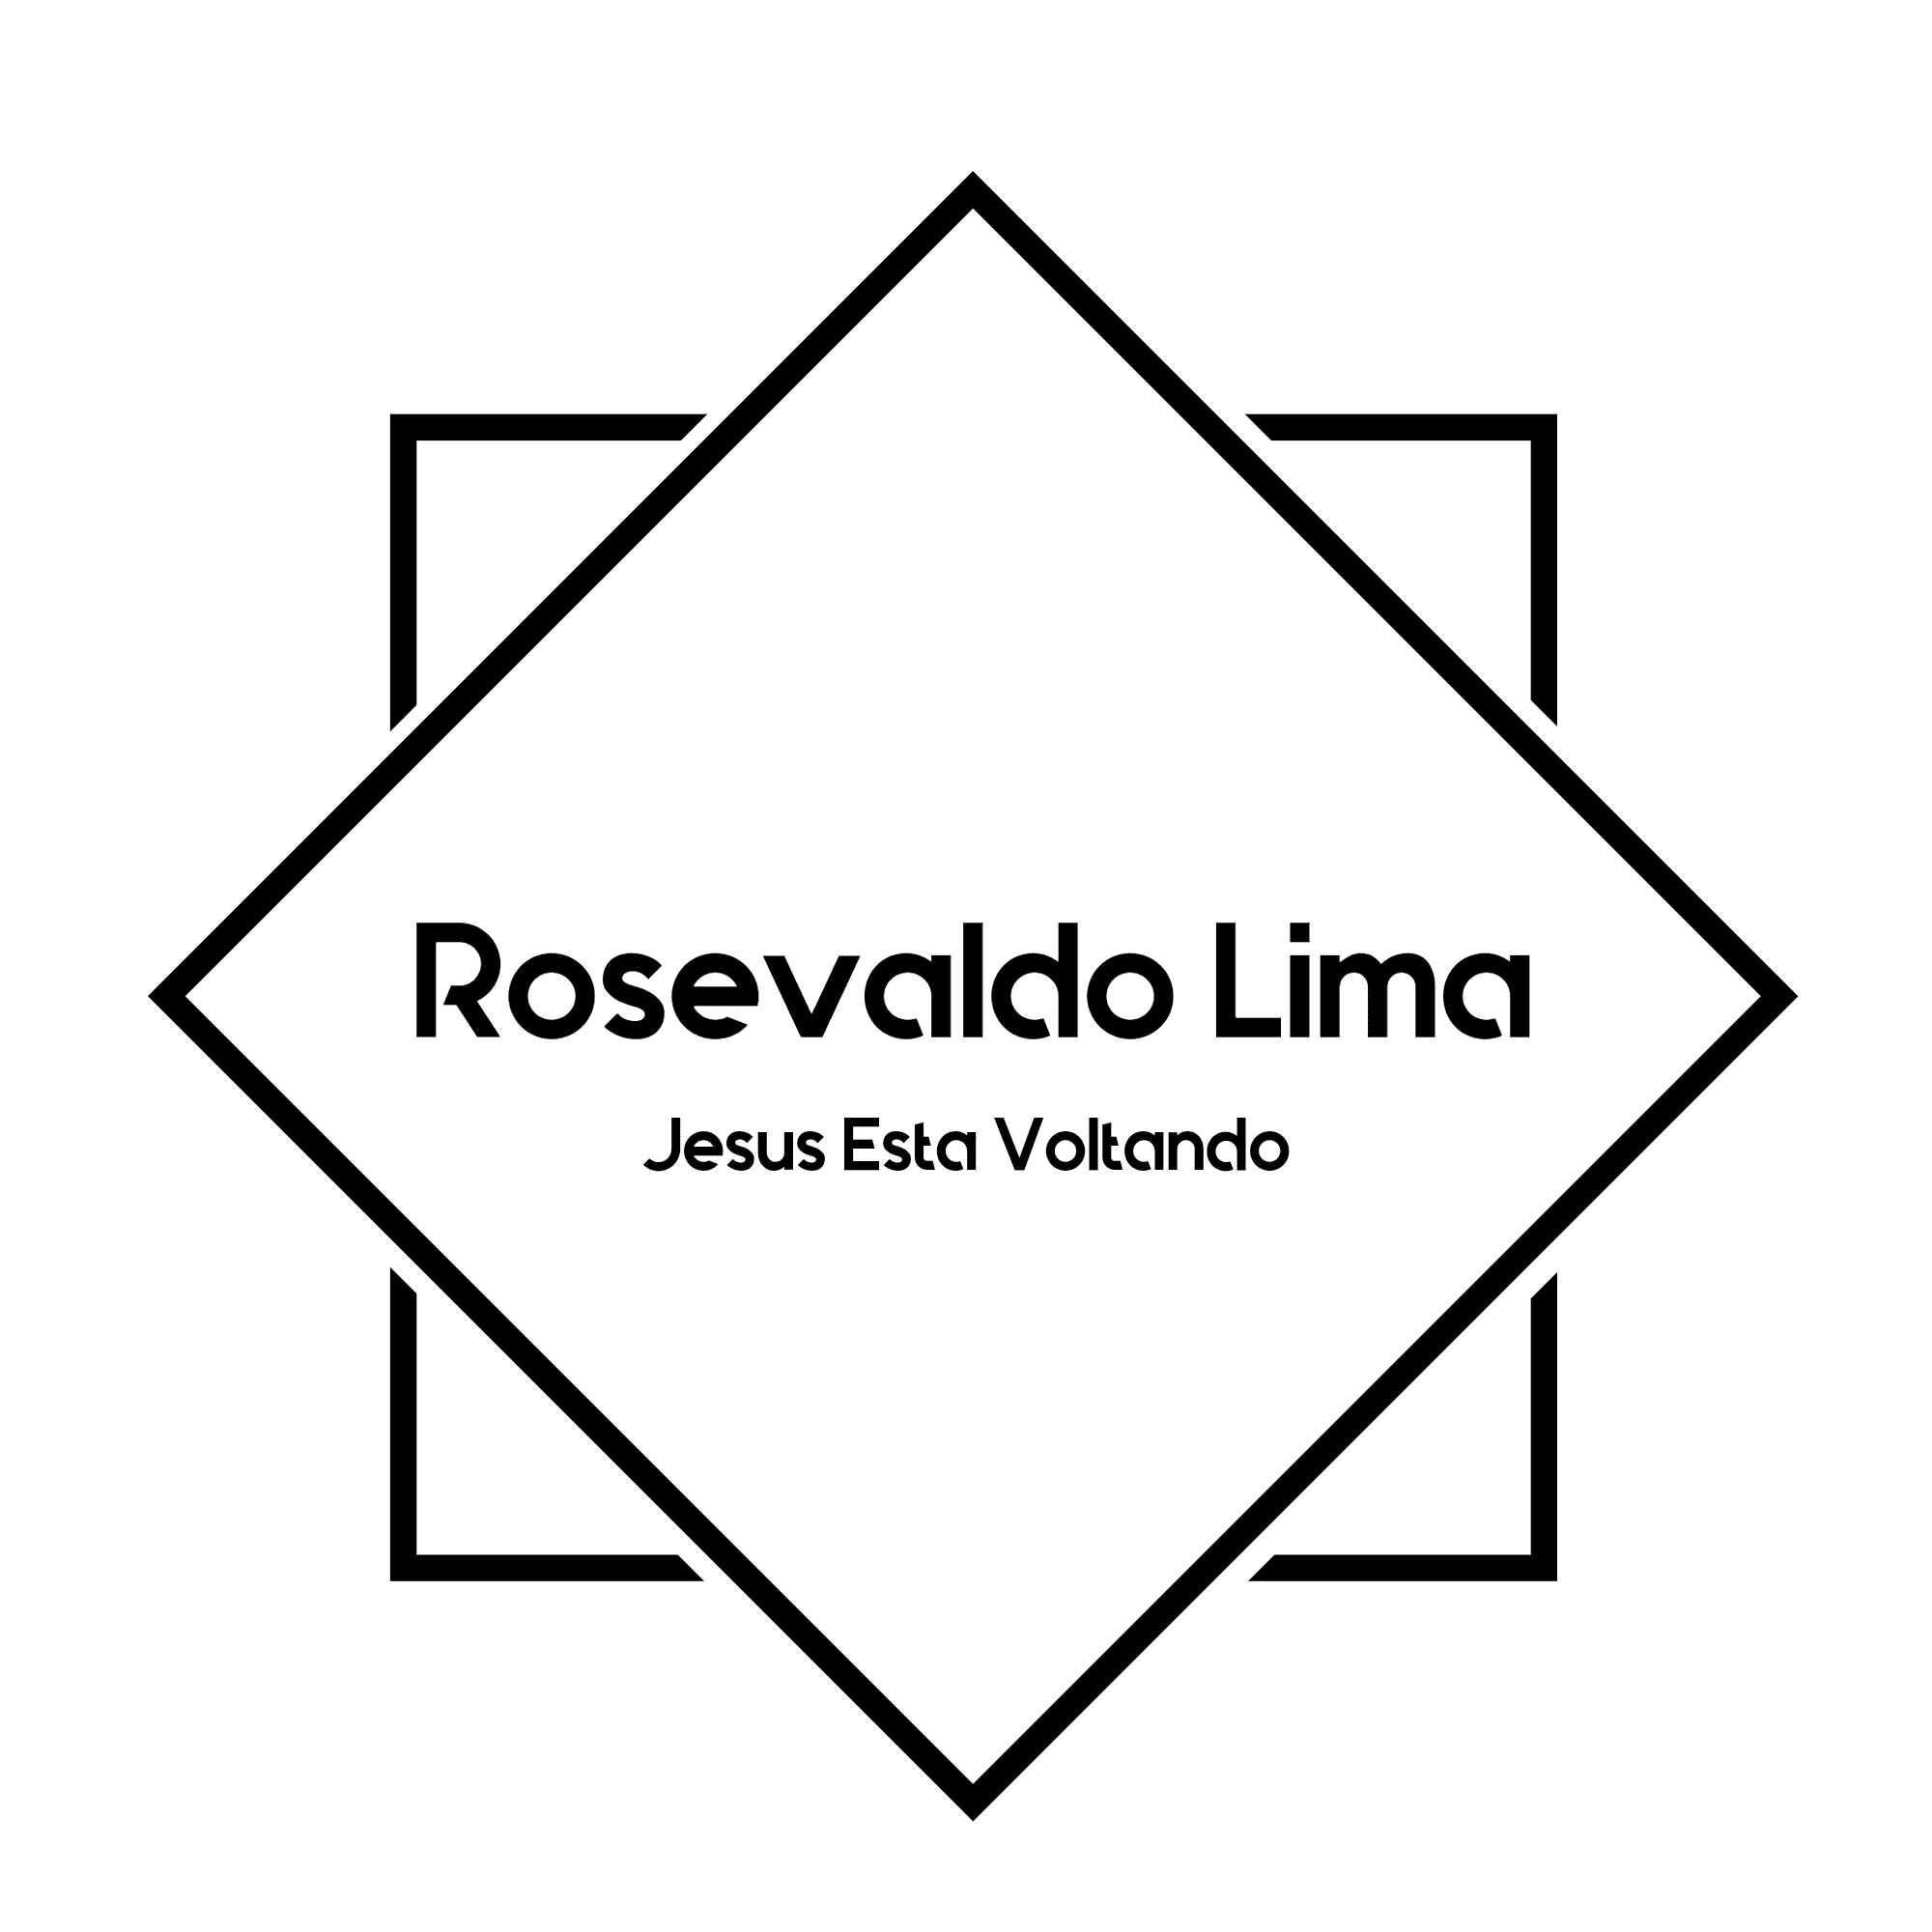 Rosevaldo Lima